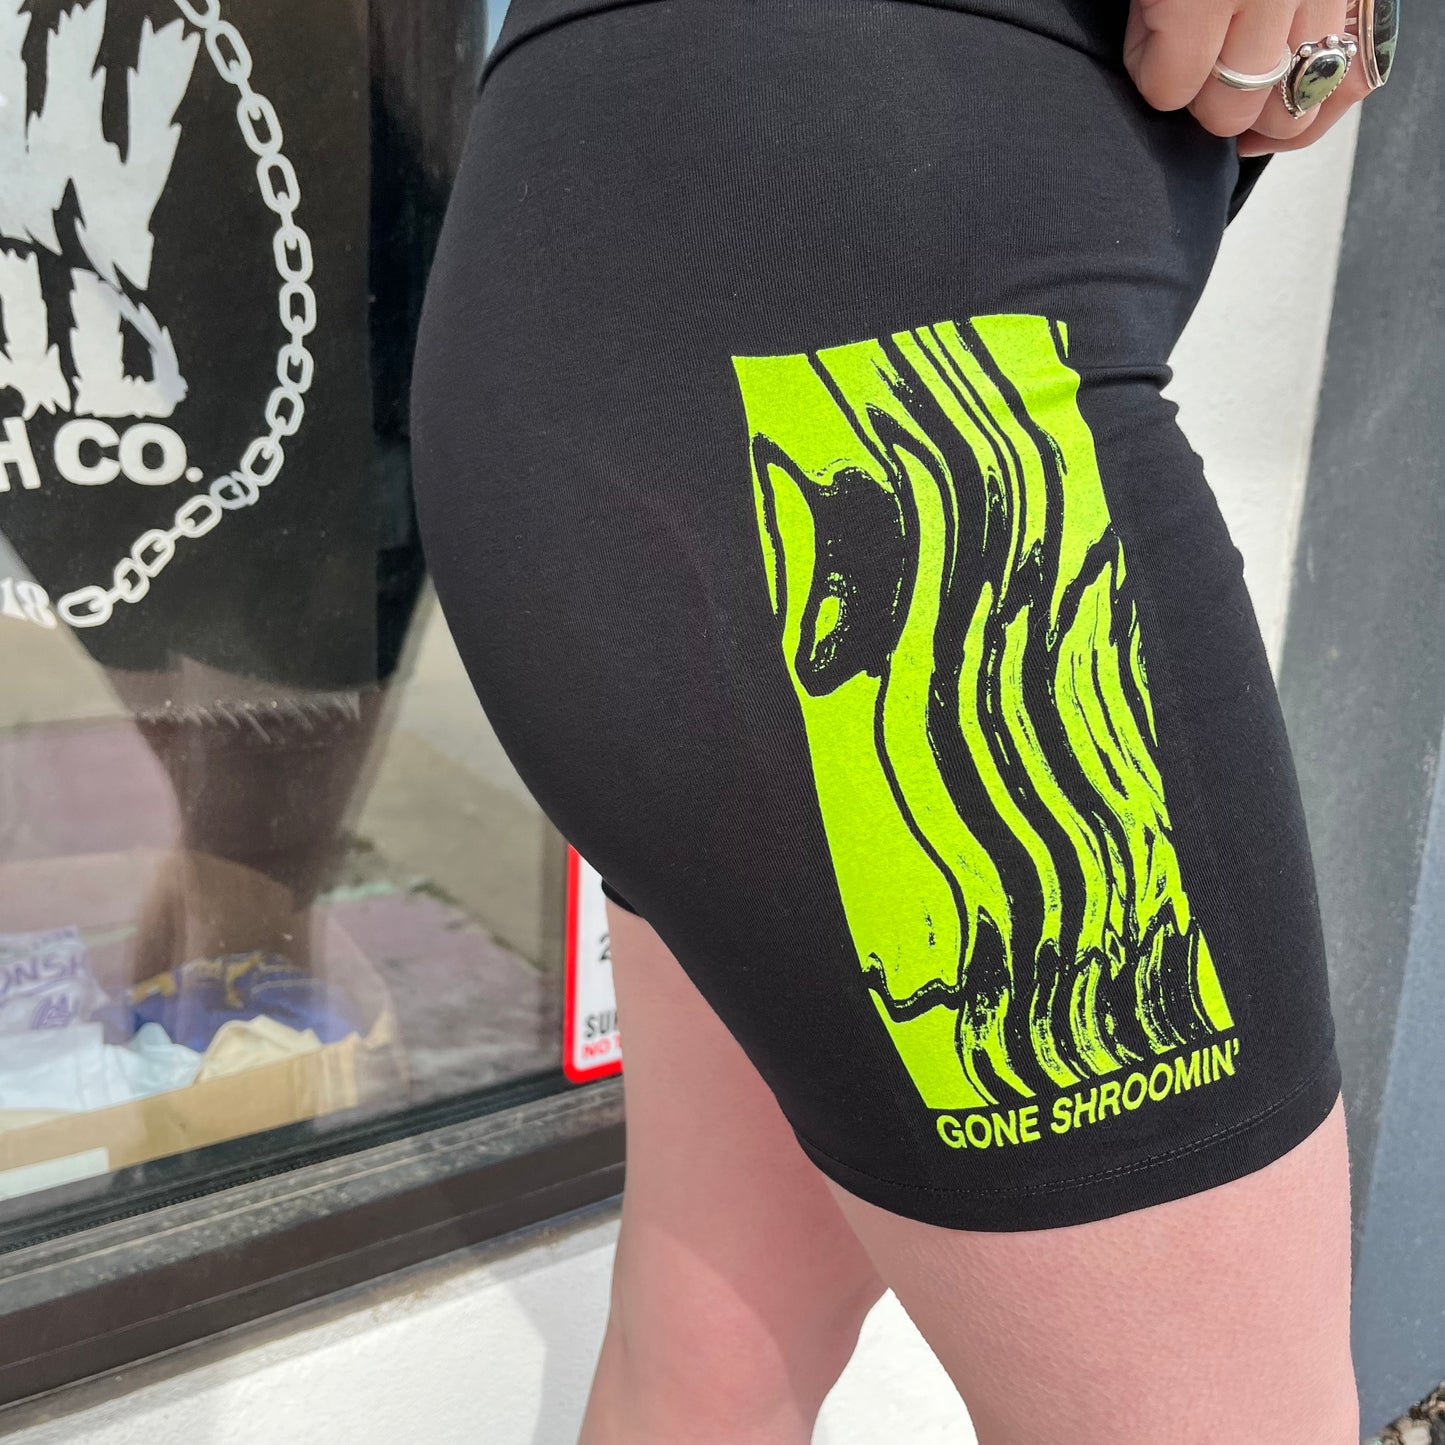 "Gone Shroomin" Glow in The Dark Waist High Ladies Bike Shorts